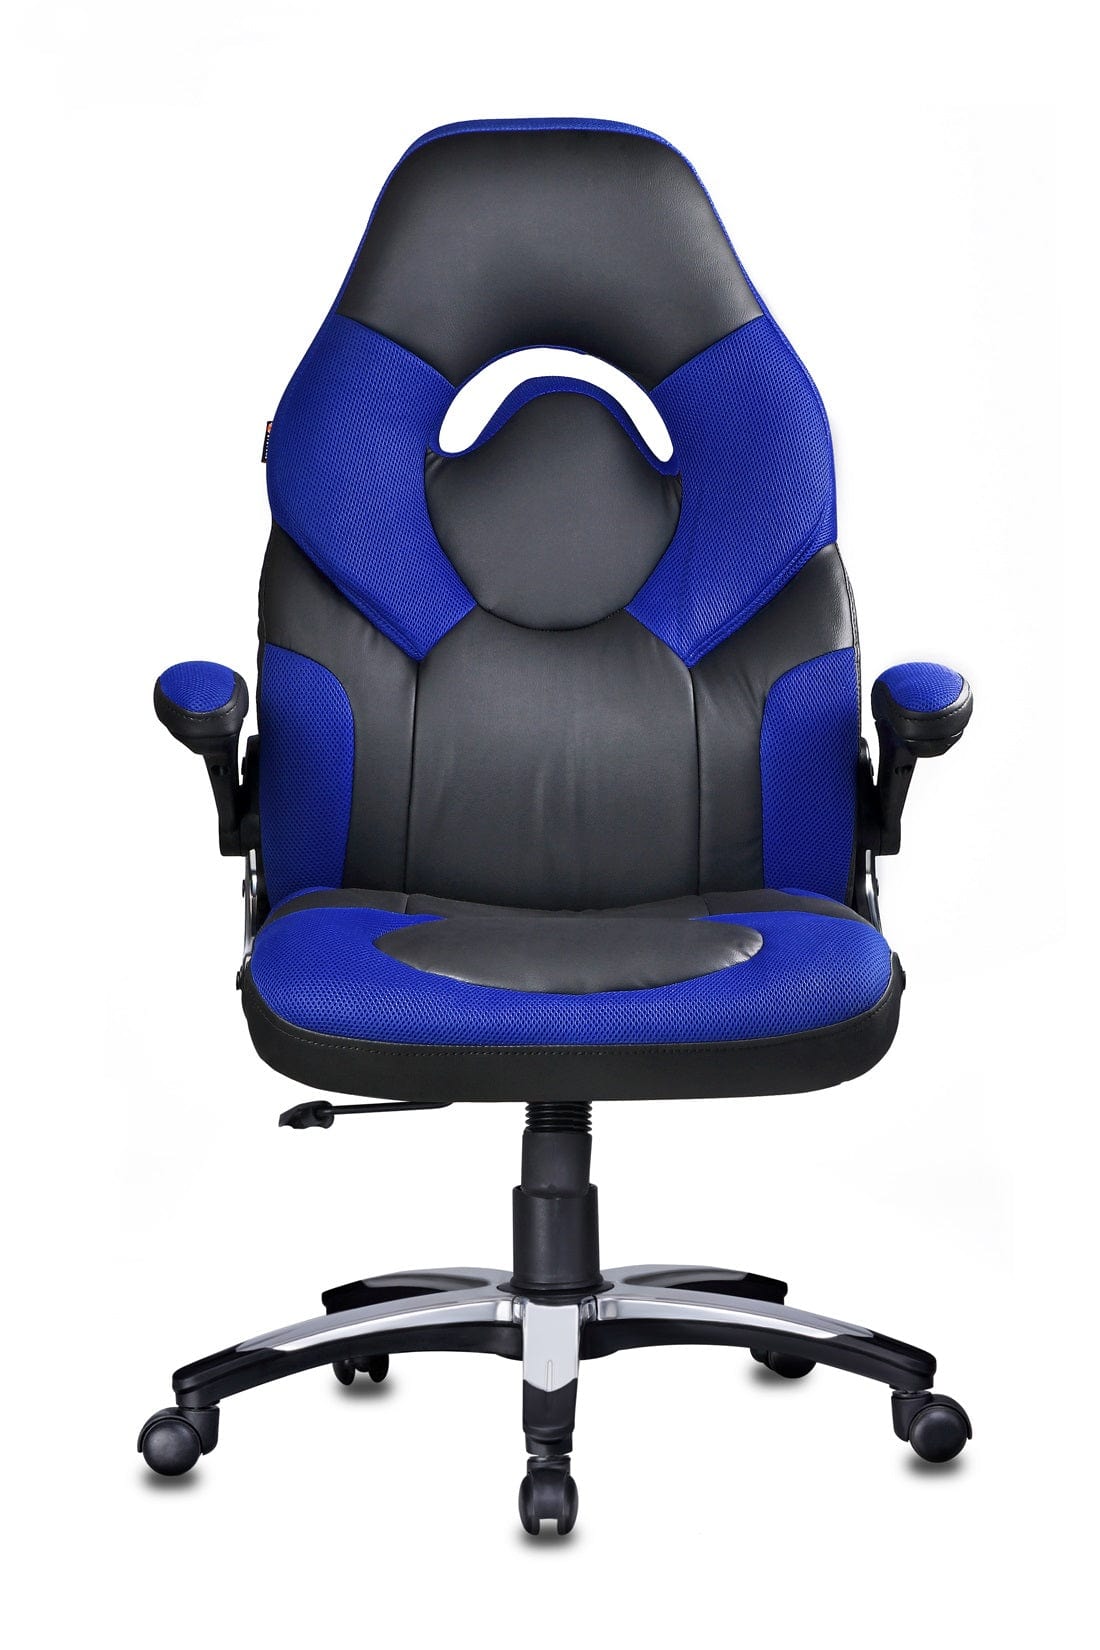 Stylish Designer chair in Black/Blue